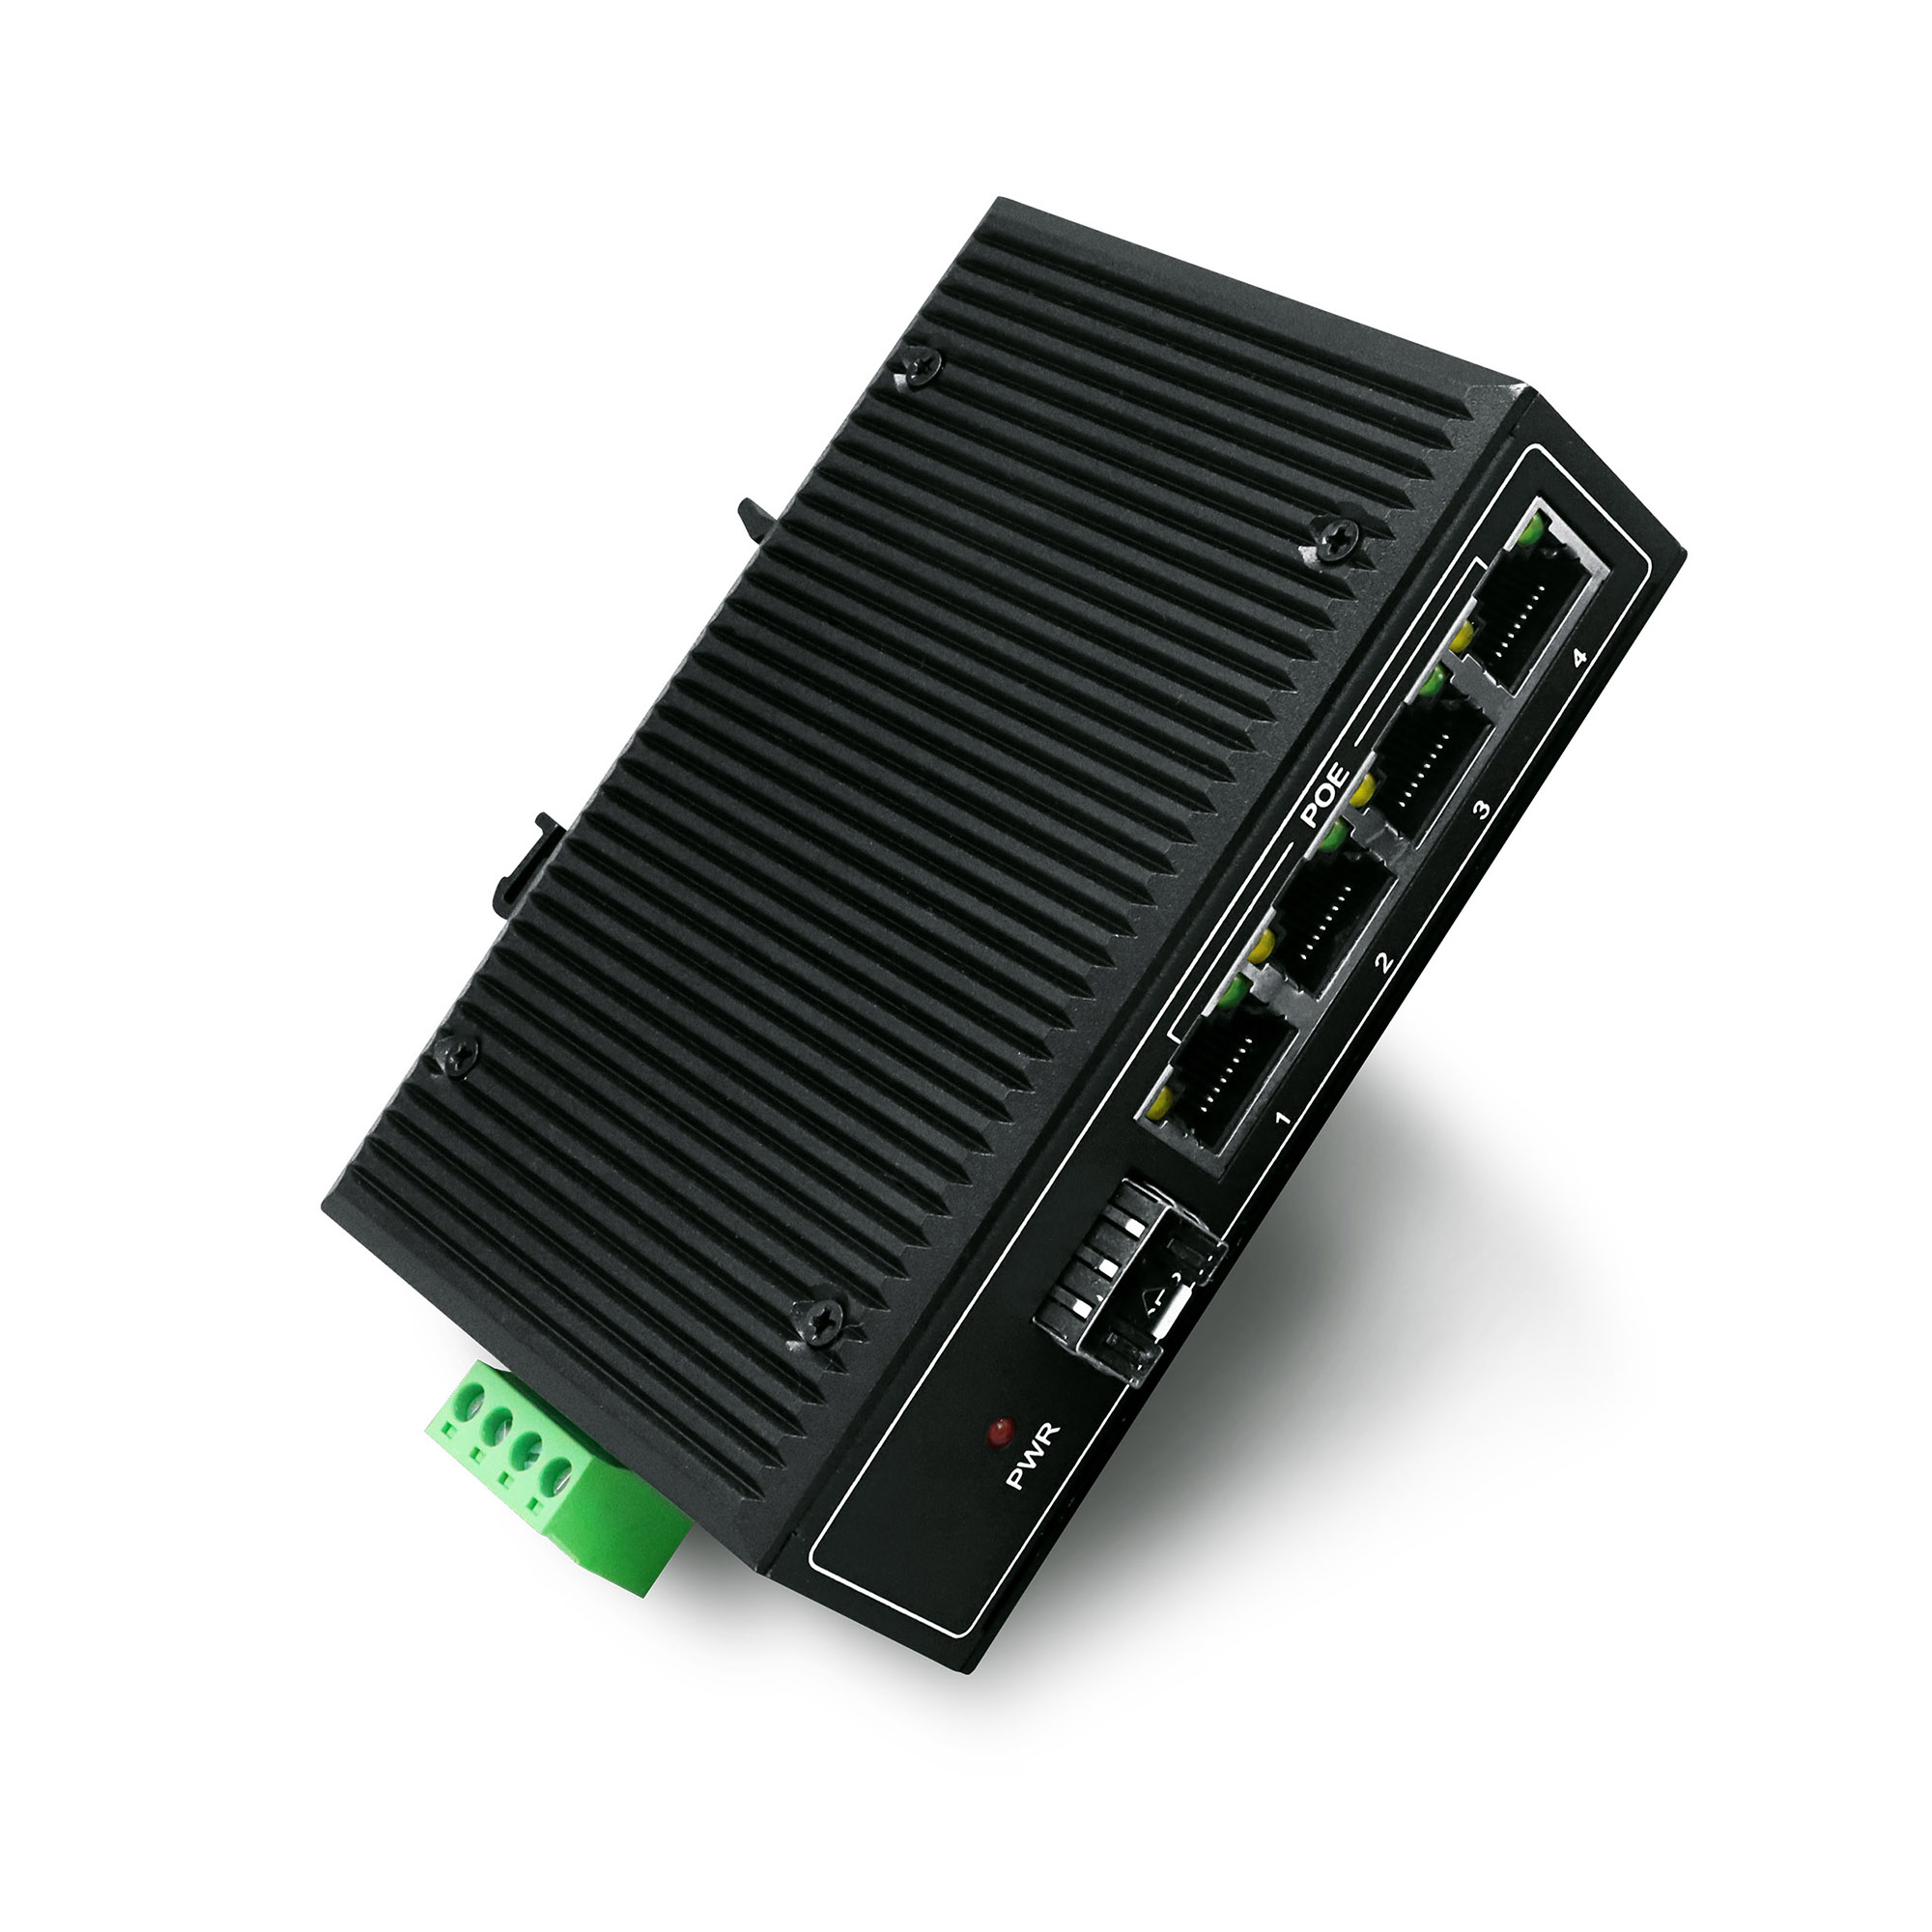 YN-SG105SP Industrial Ethernet PoE Switch